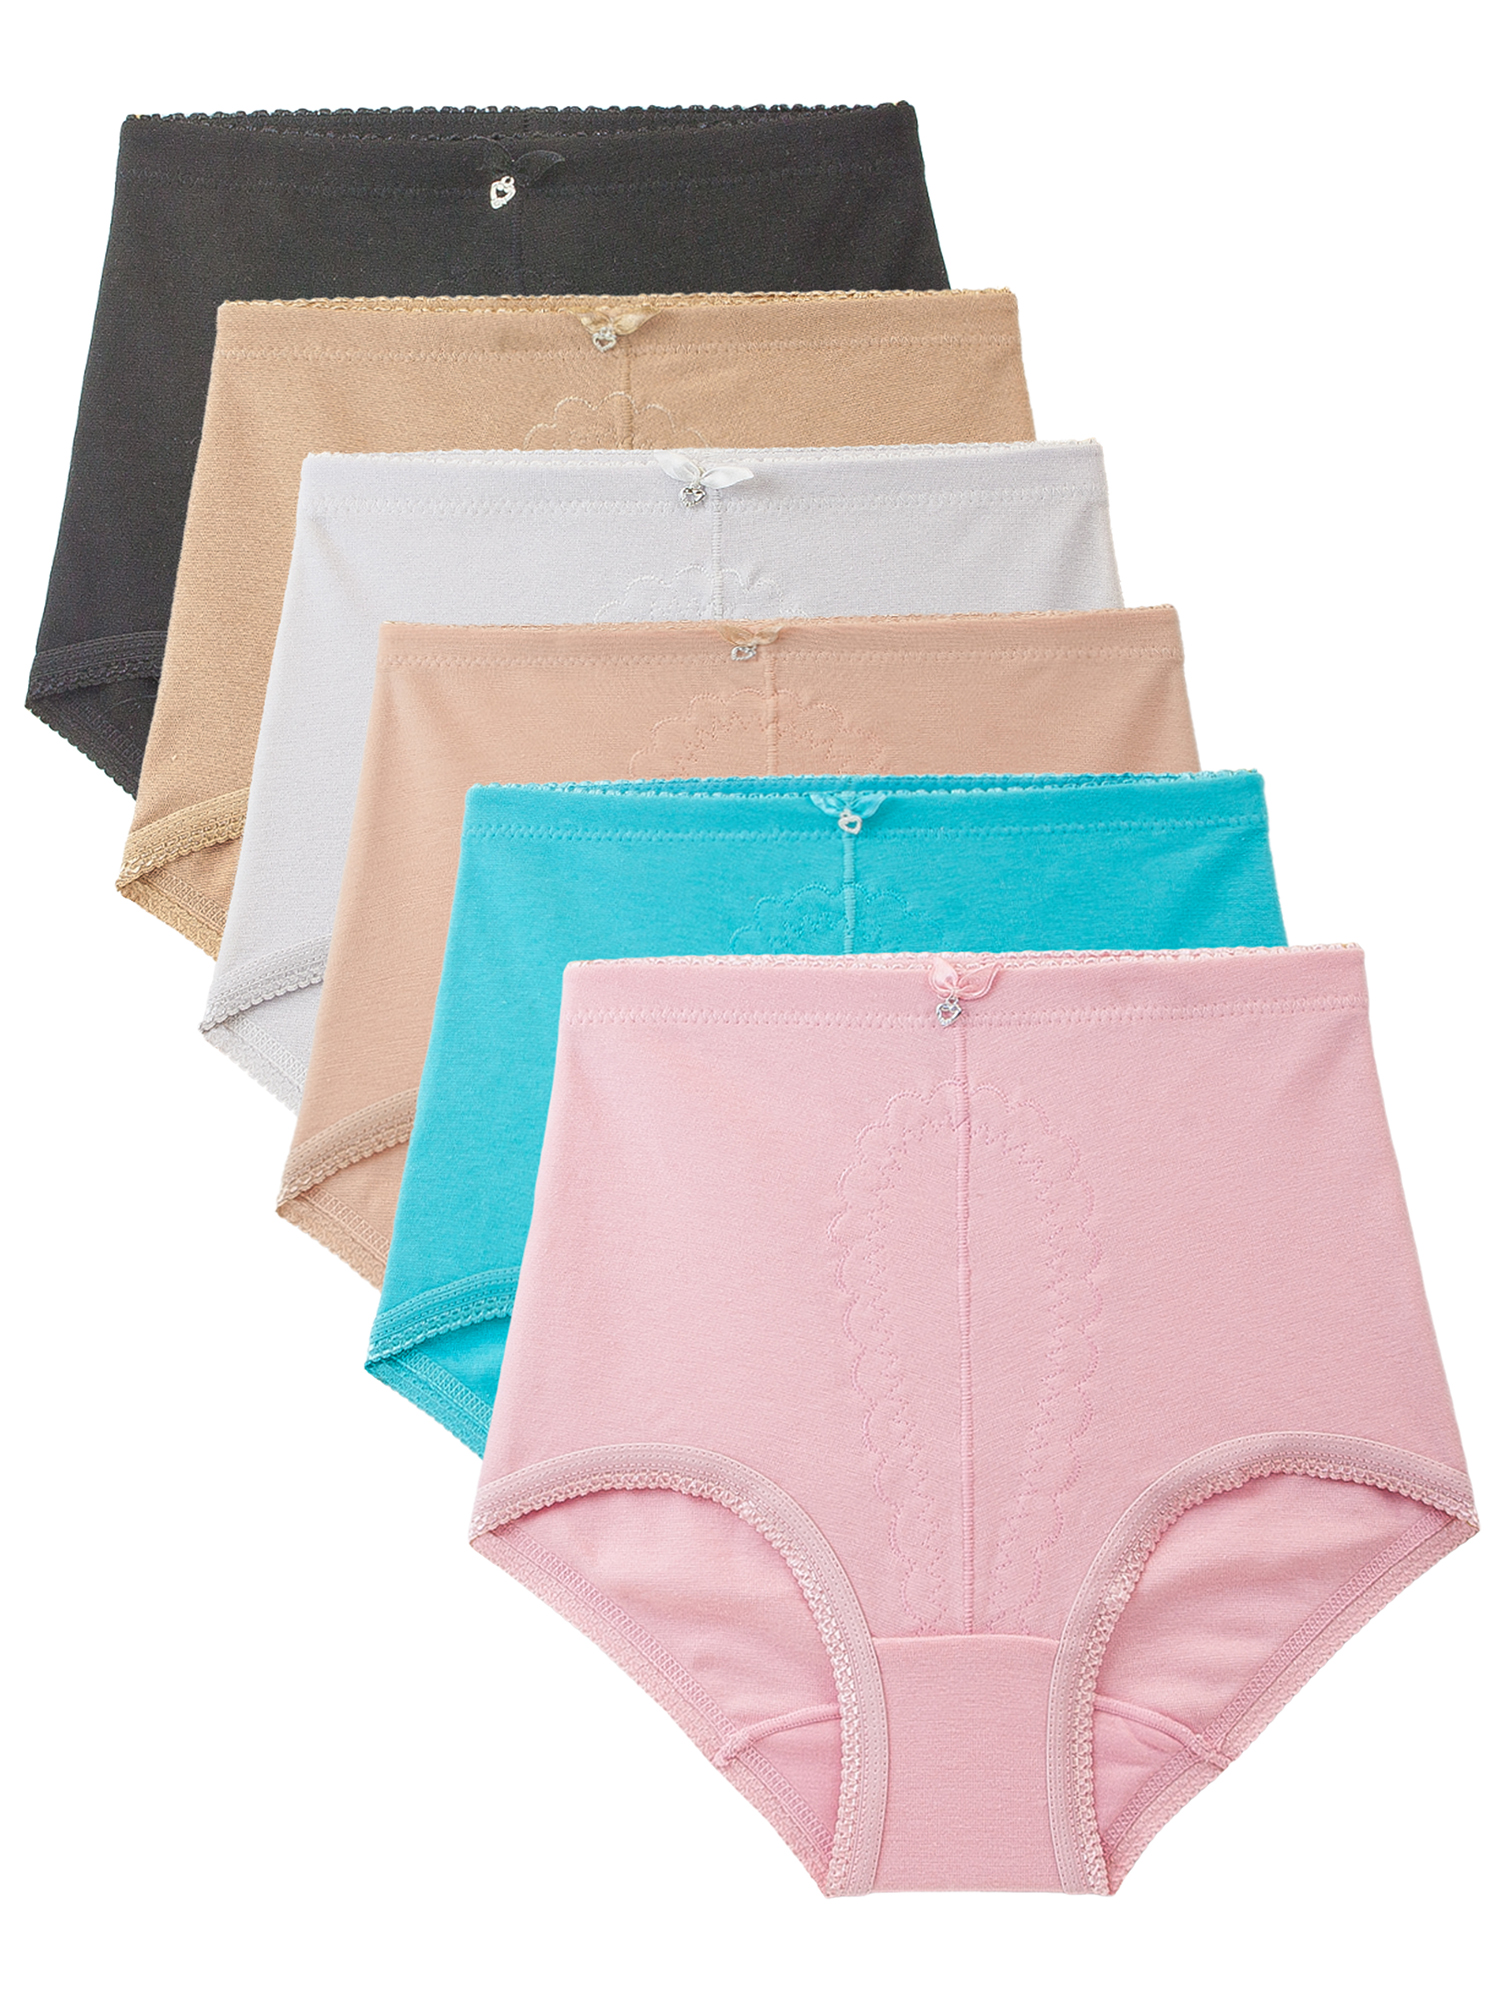 Women's Underwear Light Control Comfortable Brief Girdle Panties 6 Pack ...